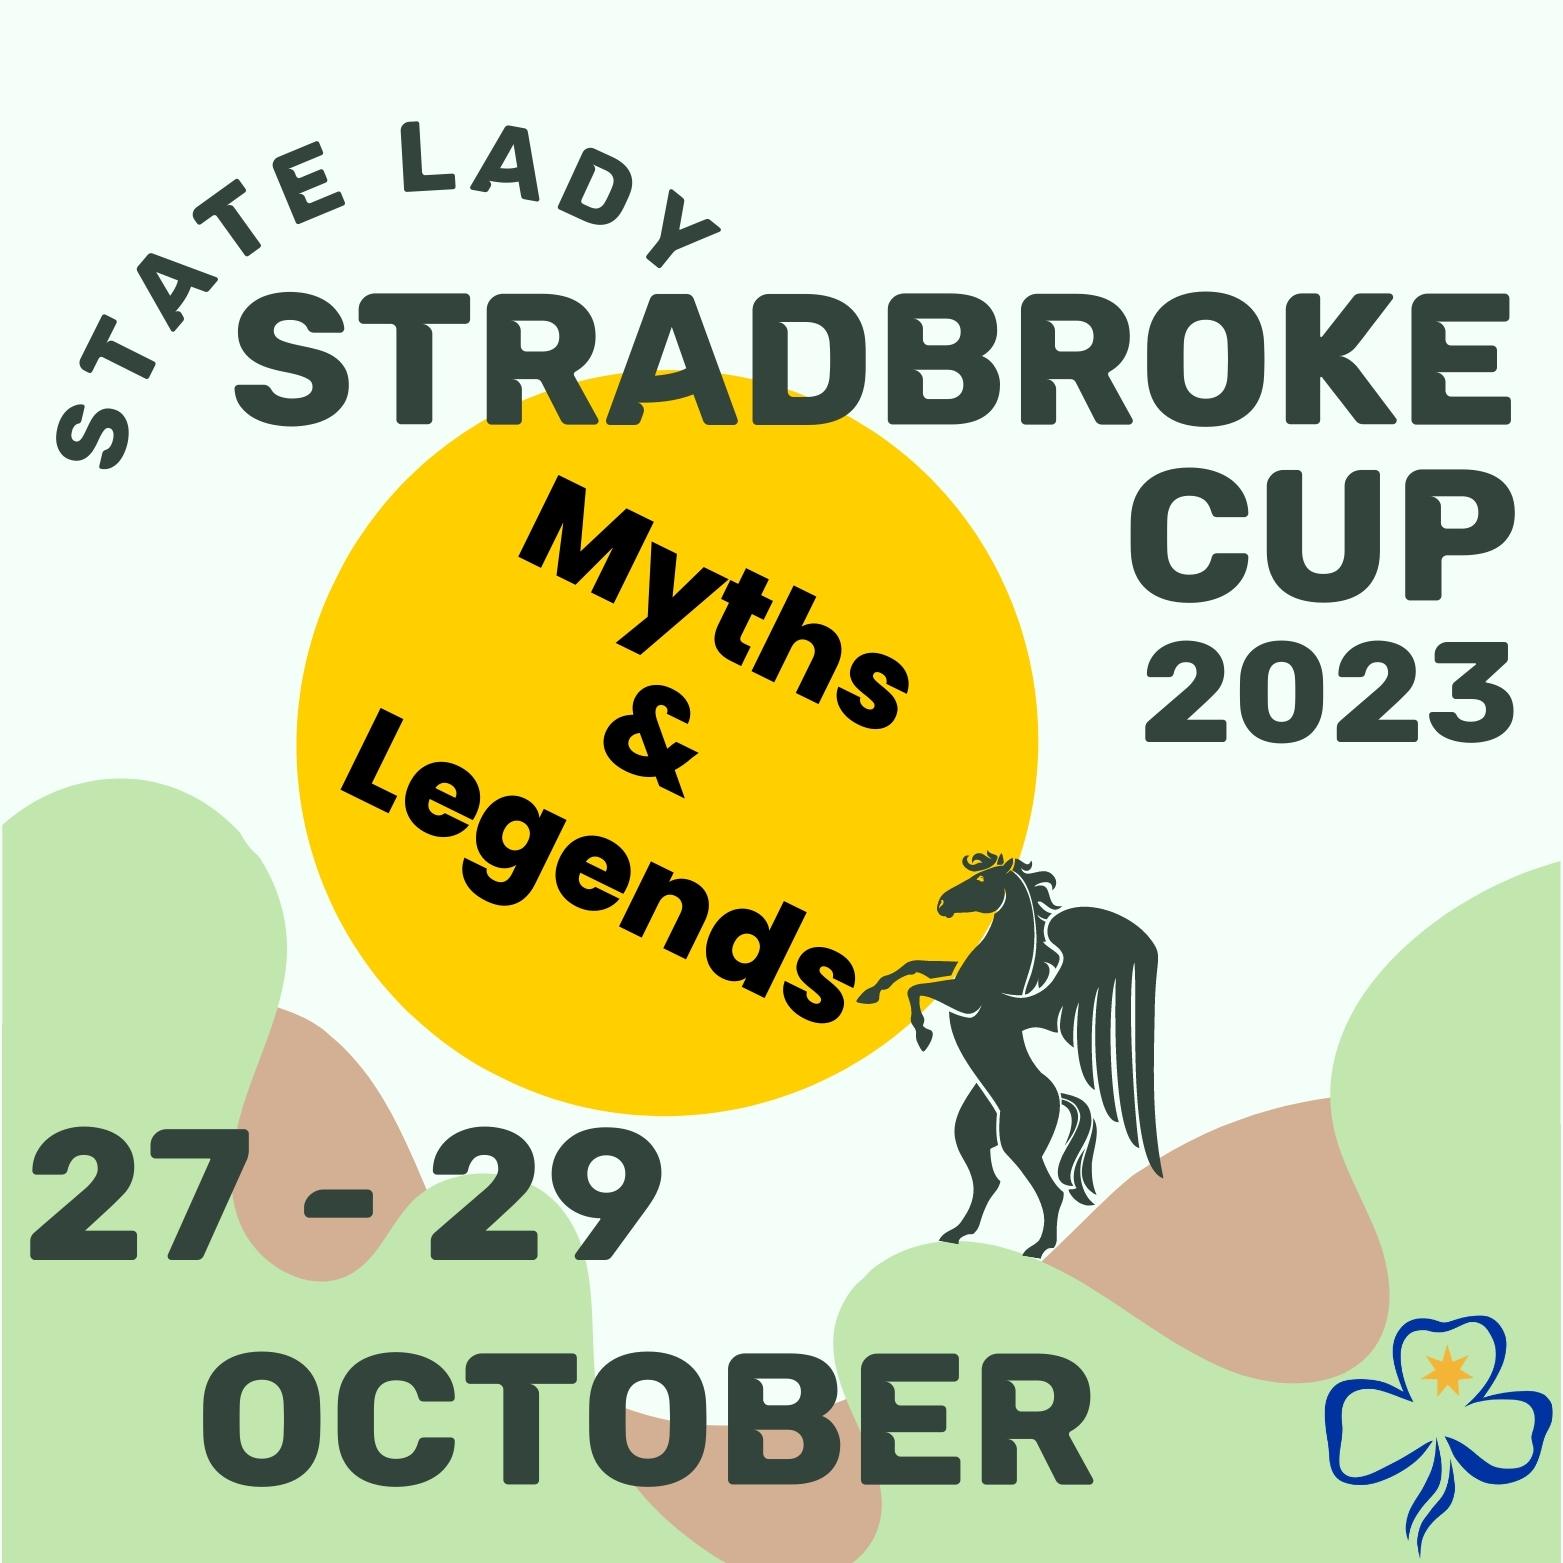 Lady Stradbroke Cup 2023